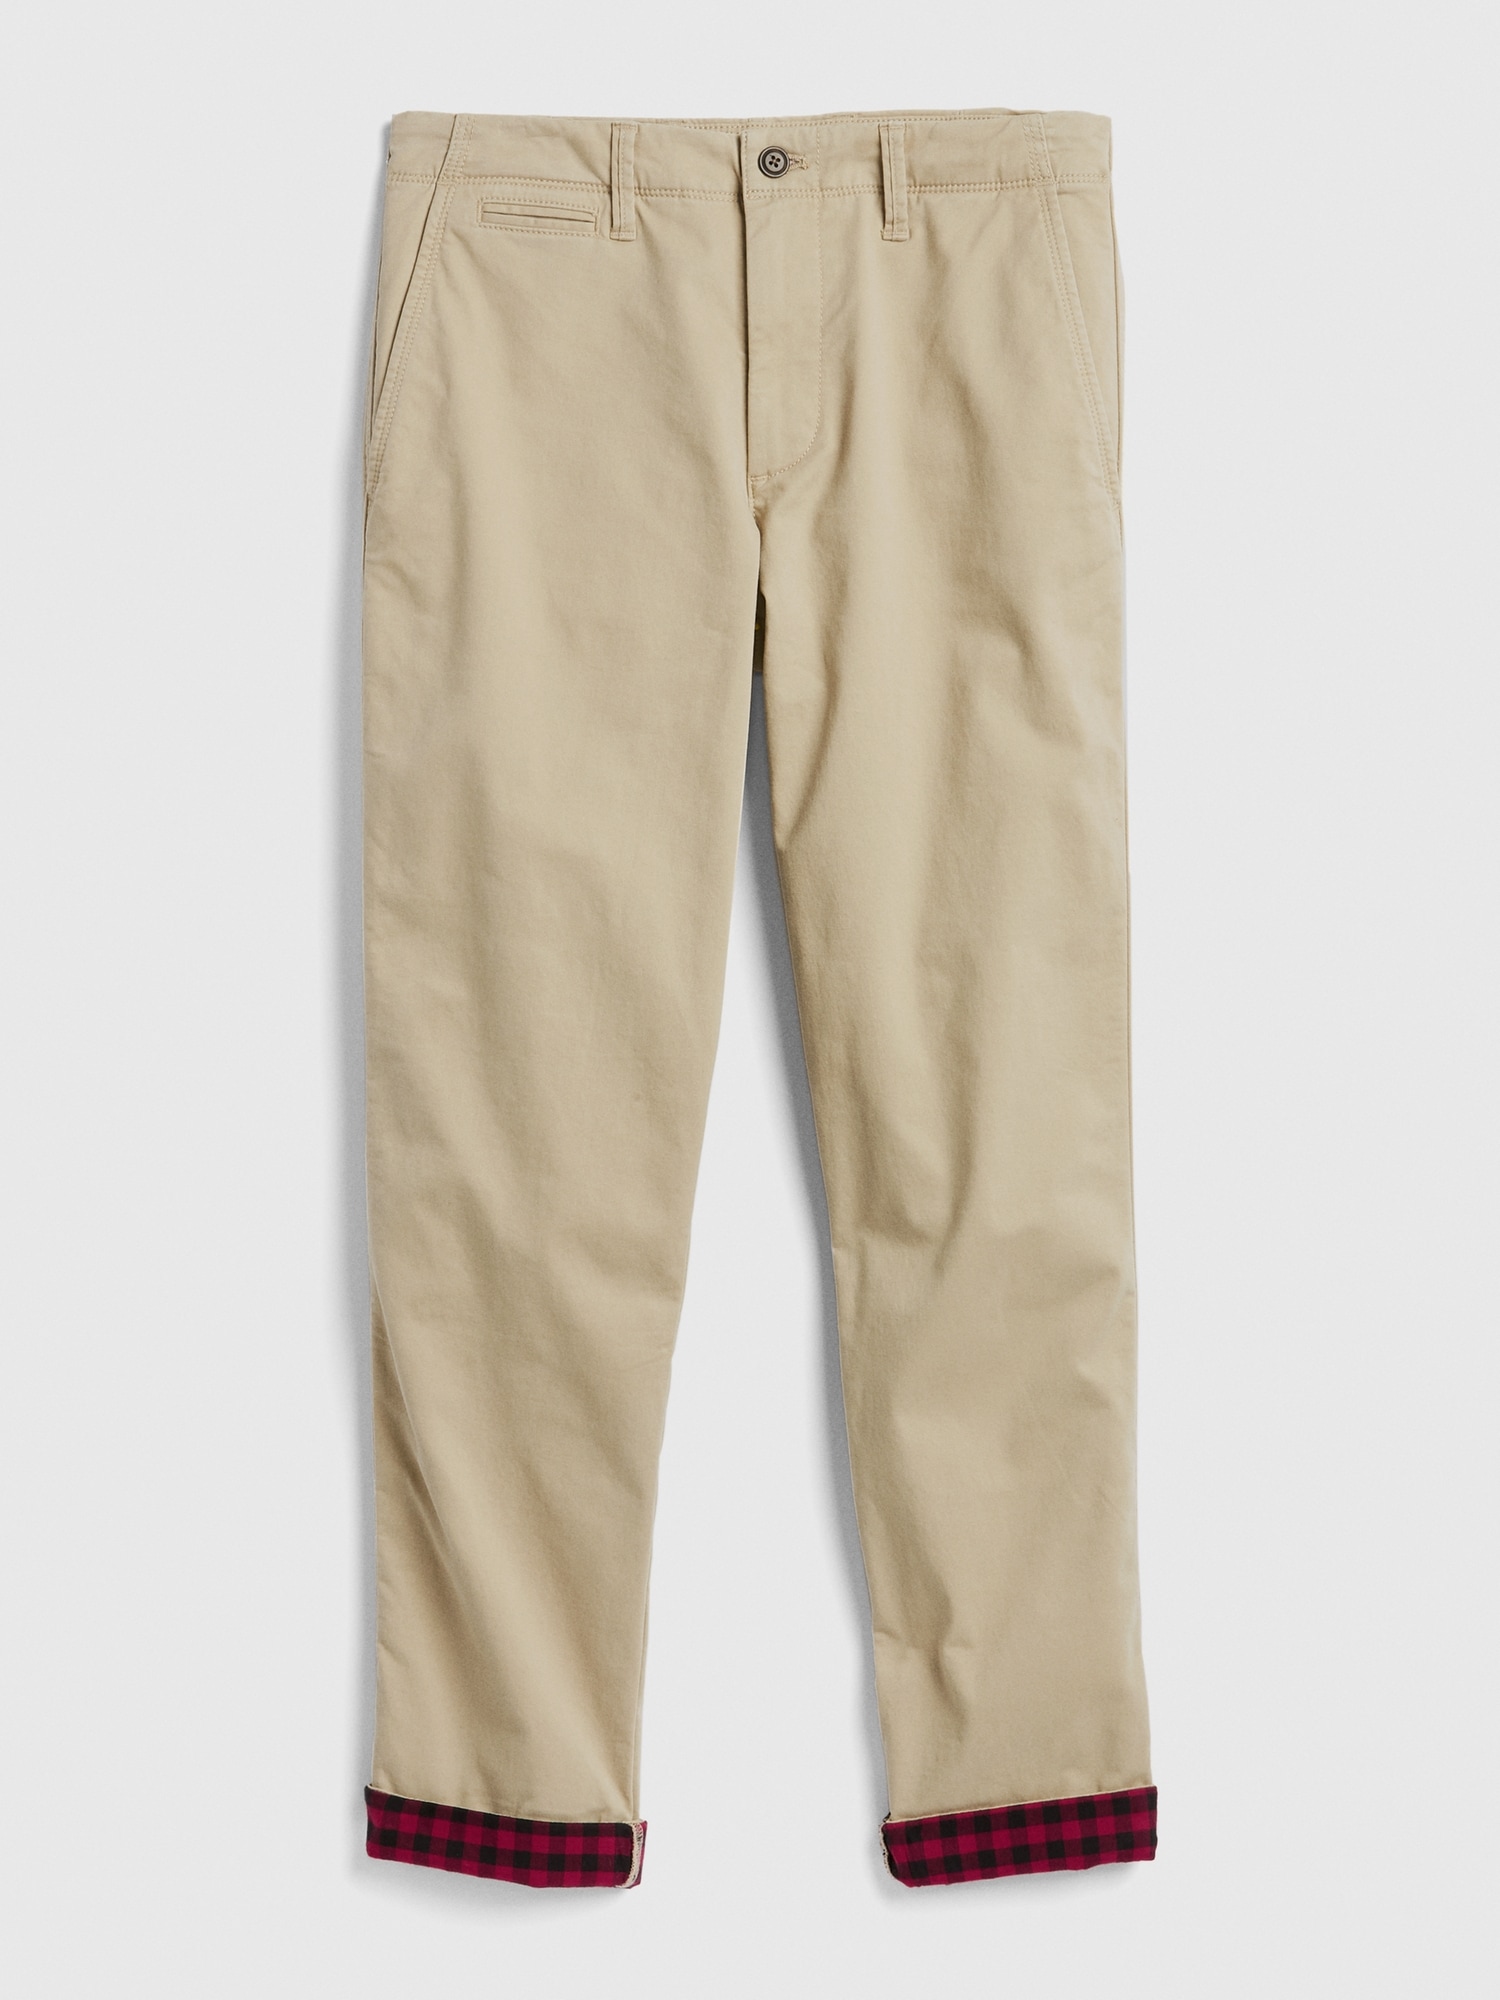 gap fleece lined pants